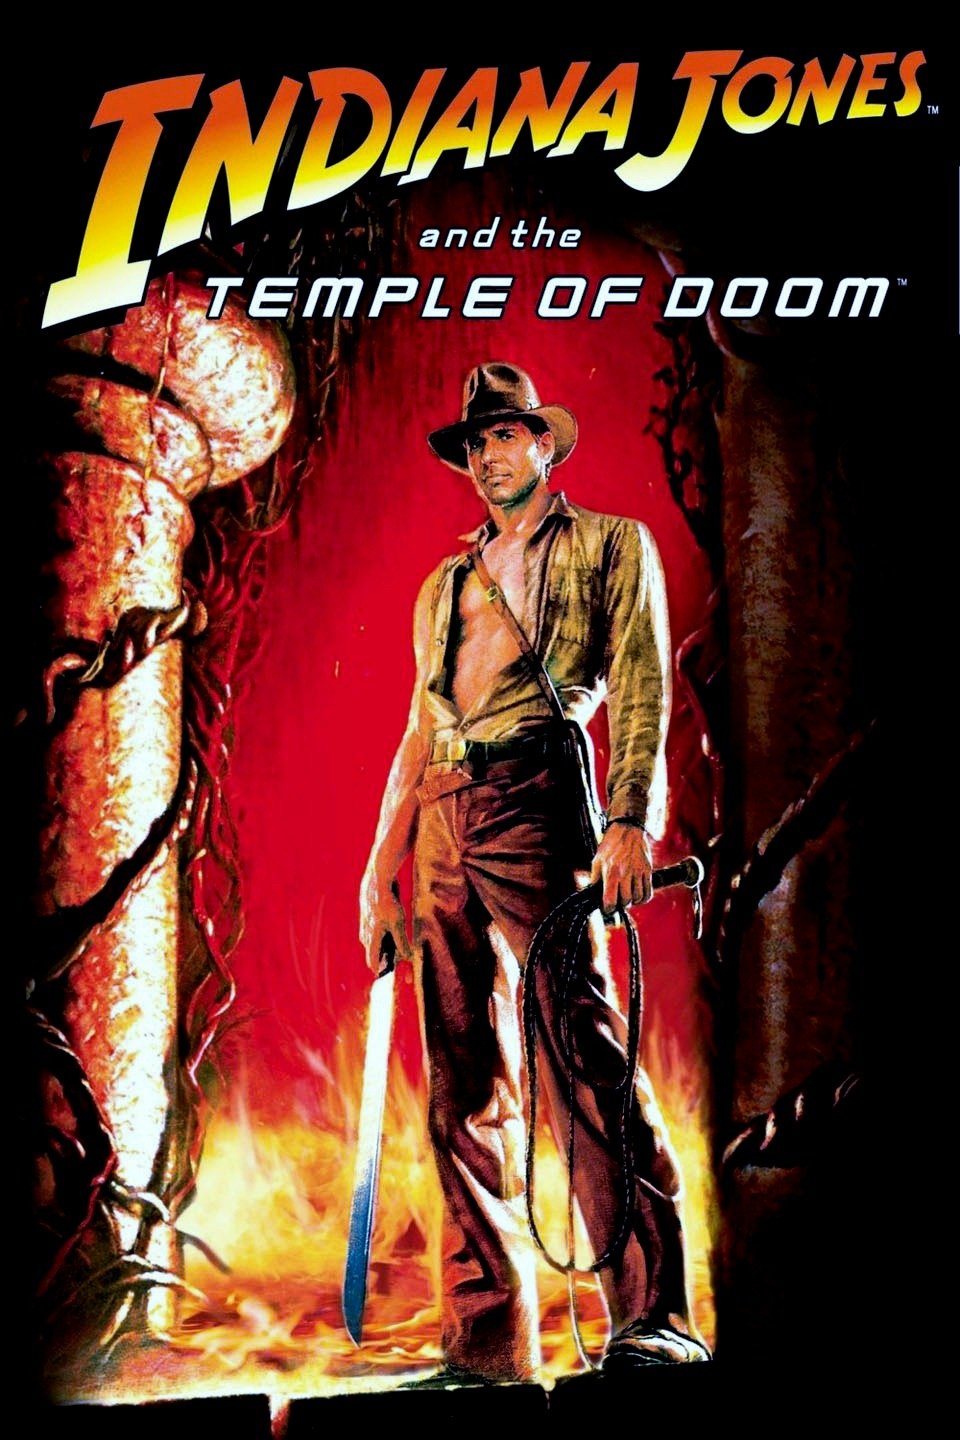 [MINI Super-HQ] Indiana Jones And The Temple of Doom (1984) ขุมทรัพย์สุดขอบฟ้า ถล่มวิหารเจ้าแม่กาลี ภาค 2 [1080p] [พากย์ไทย 5.1 + อังกฤษ DTS] [บรรยายไทย + อังกฤษ] [เสียงไทย + ซับไทย] [ONE2UP]